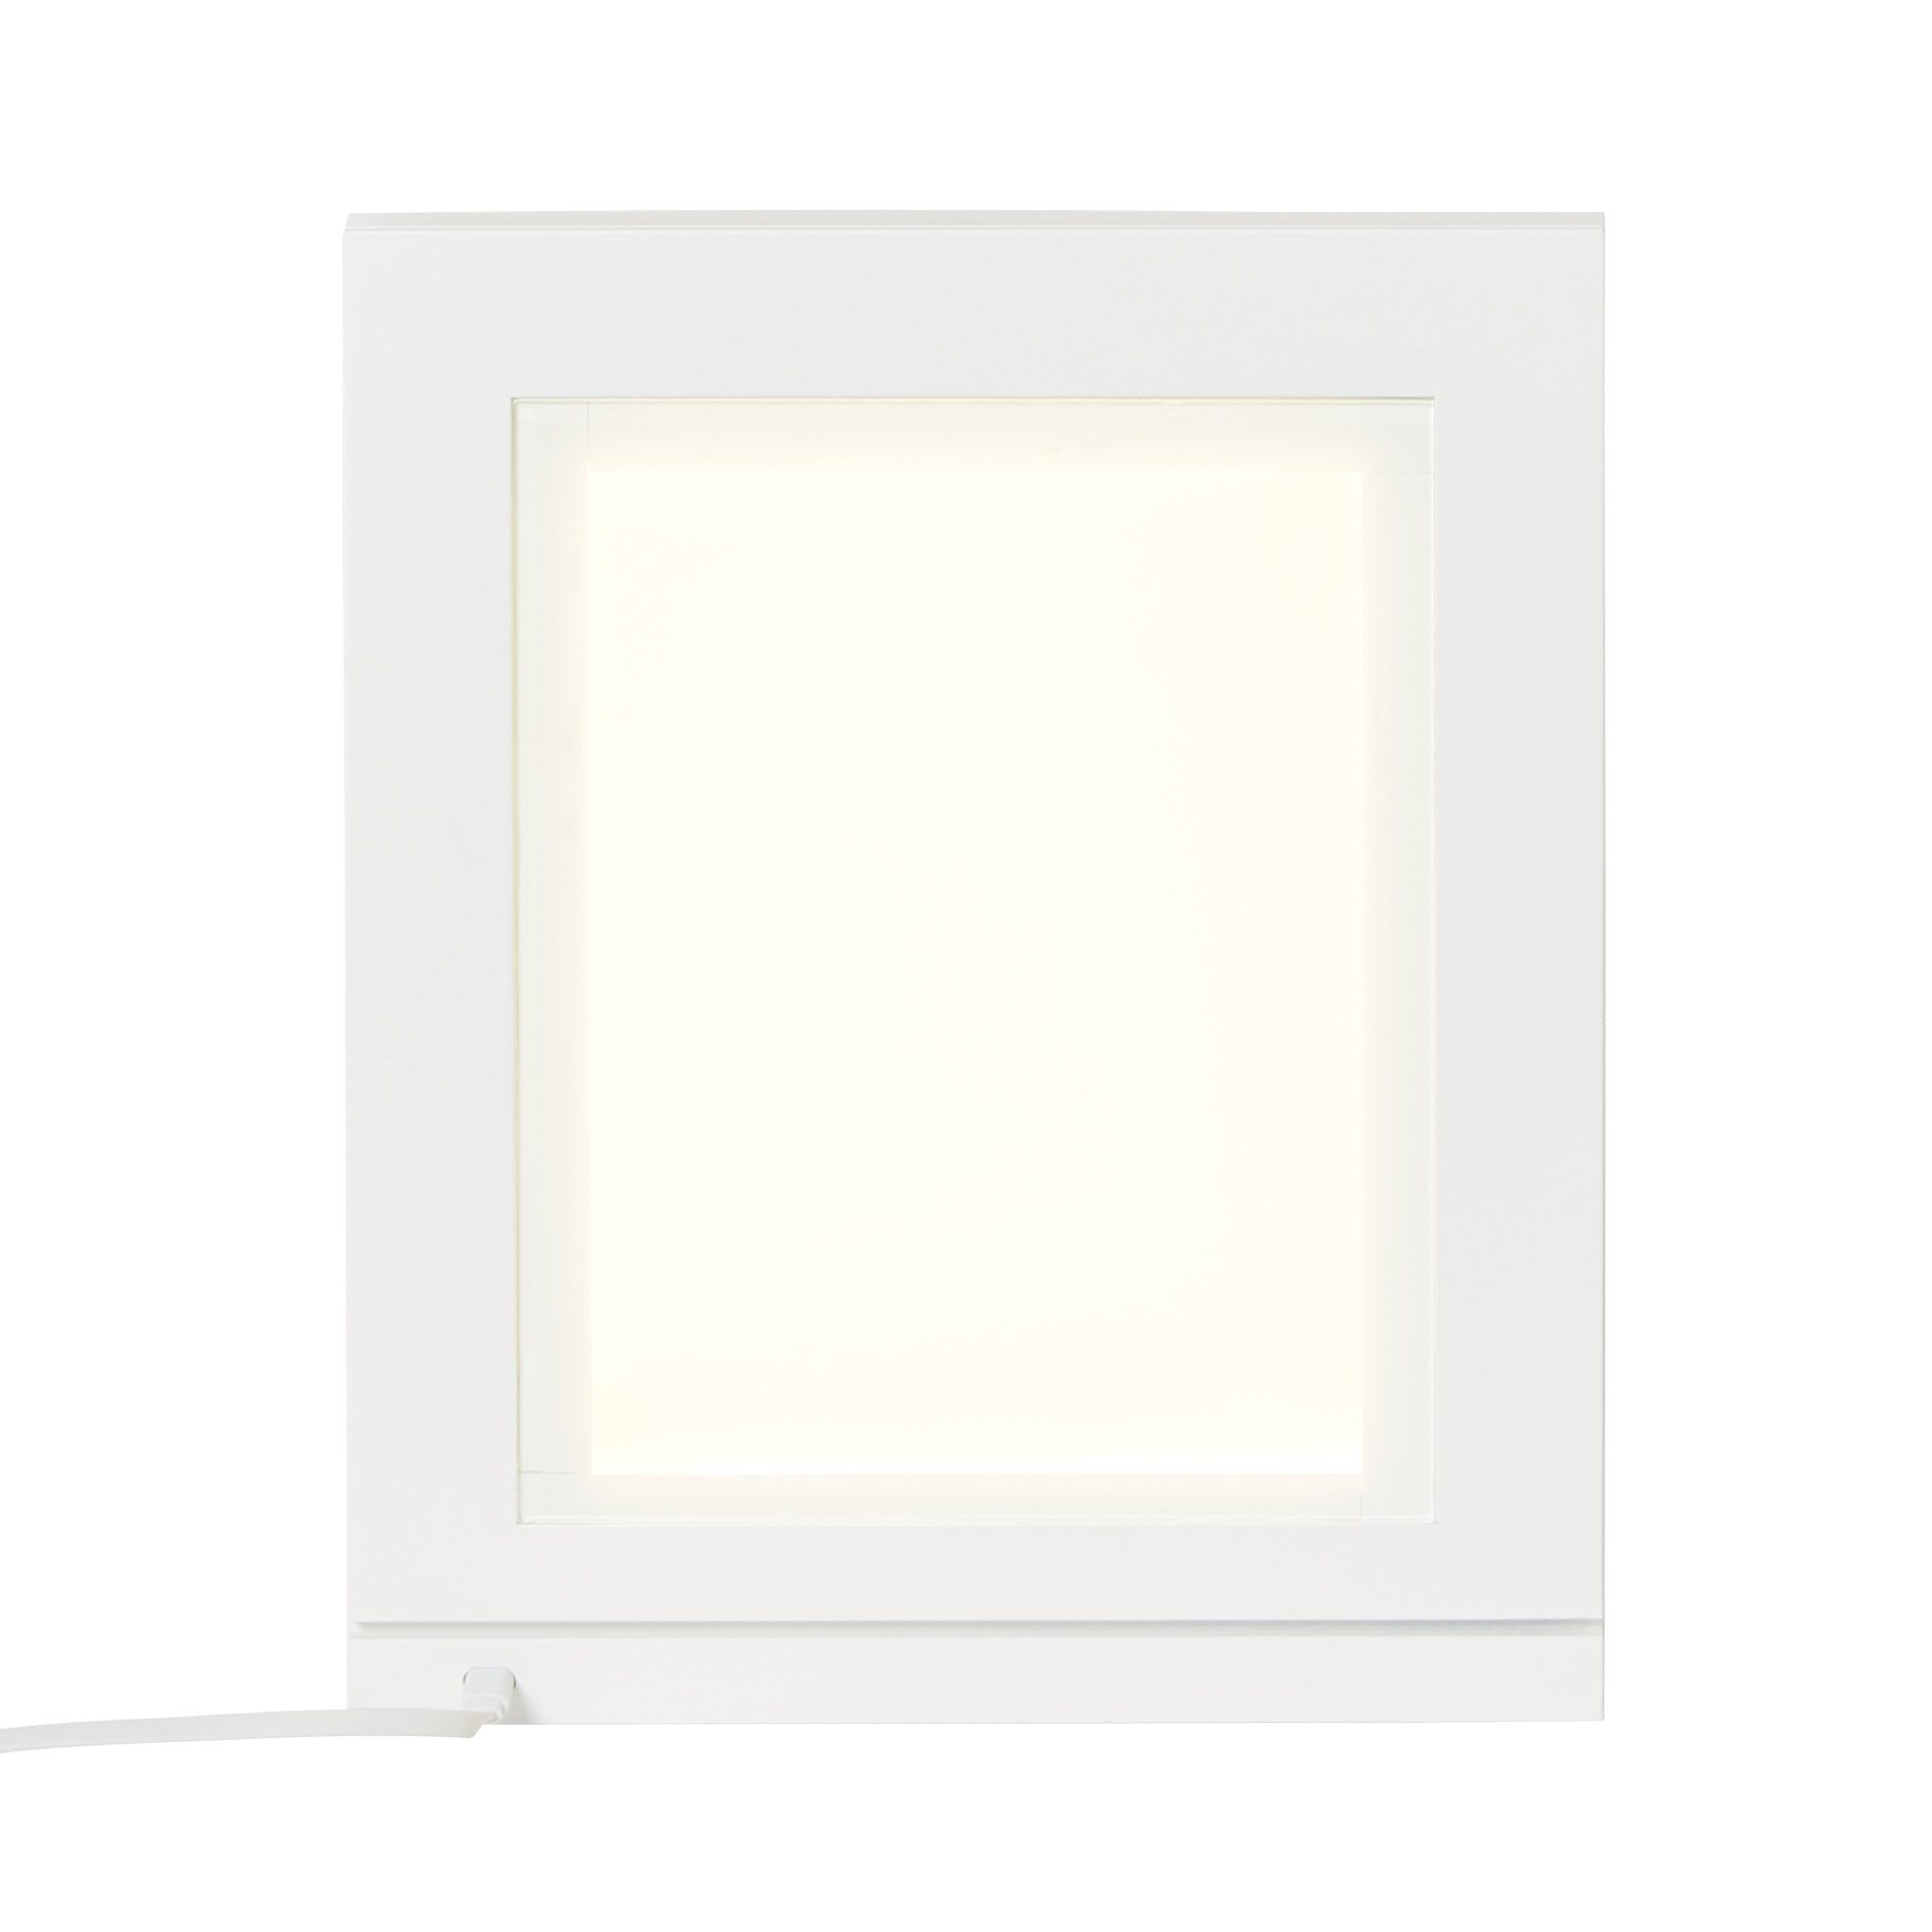 GoodHome Tasuke White Cool white & warm white Under cabinet light (W)264mm